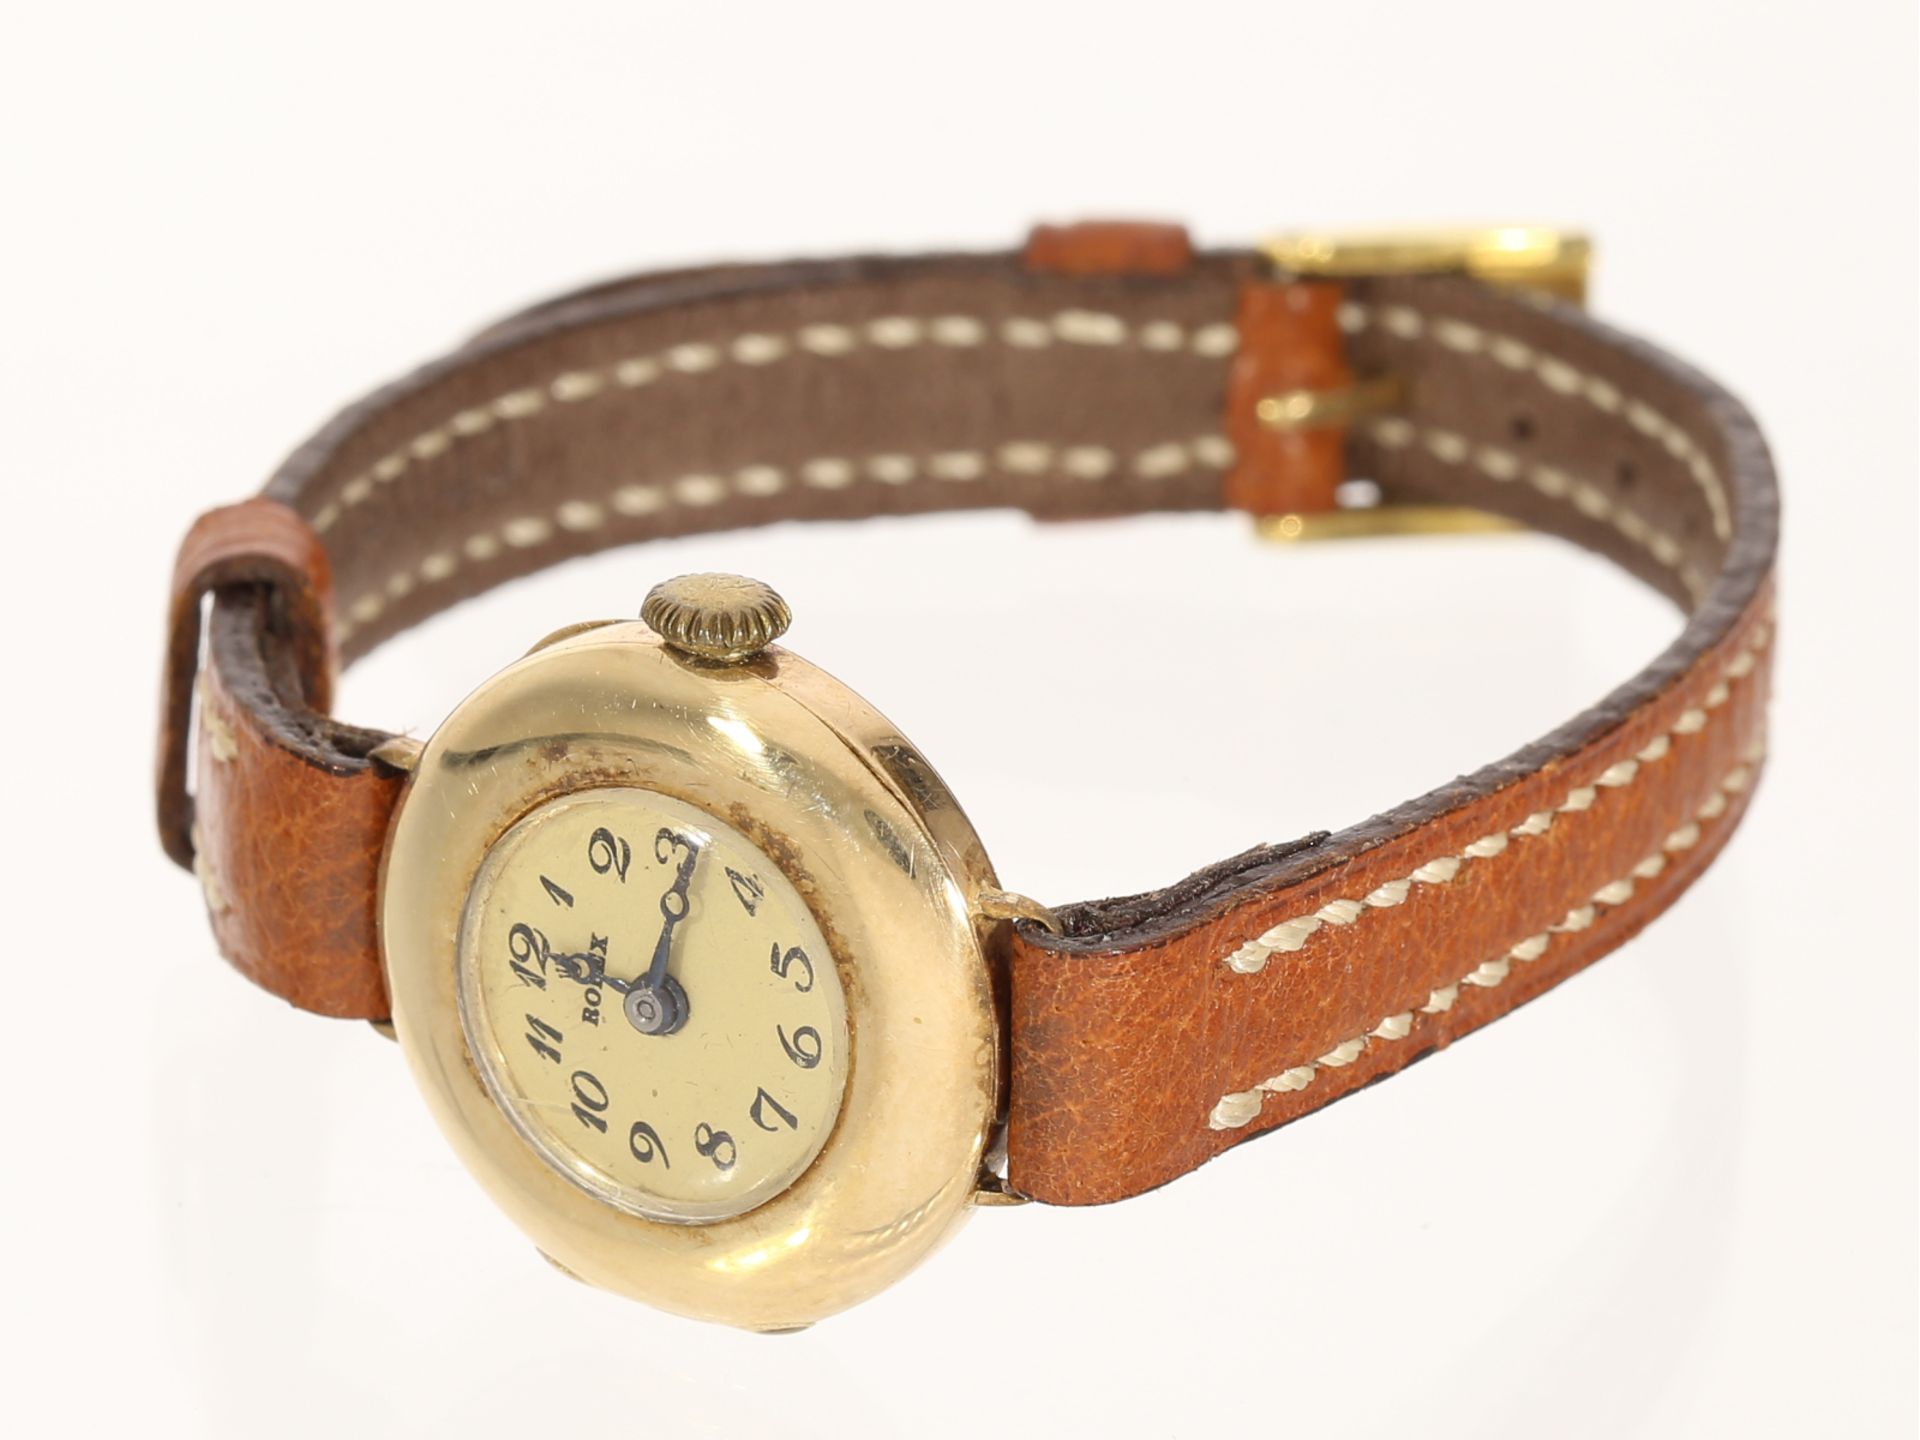 Armbanduhr: frühe Damenuhr der Marke Rolex, 14K Gold, 1930/40 - Image 2 of 3